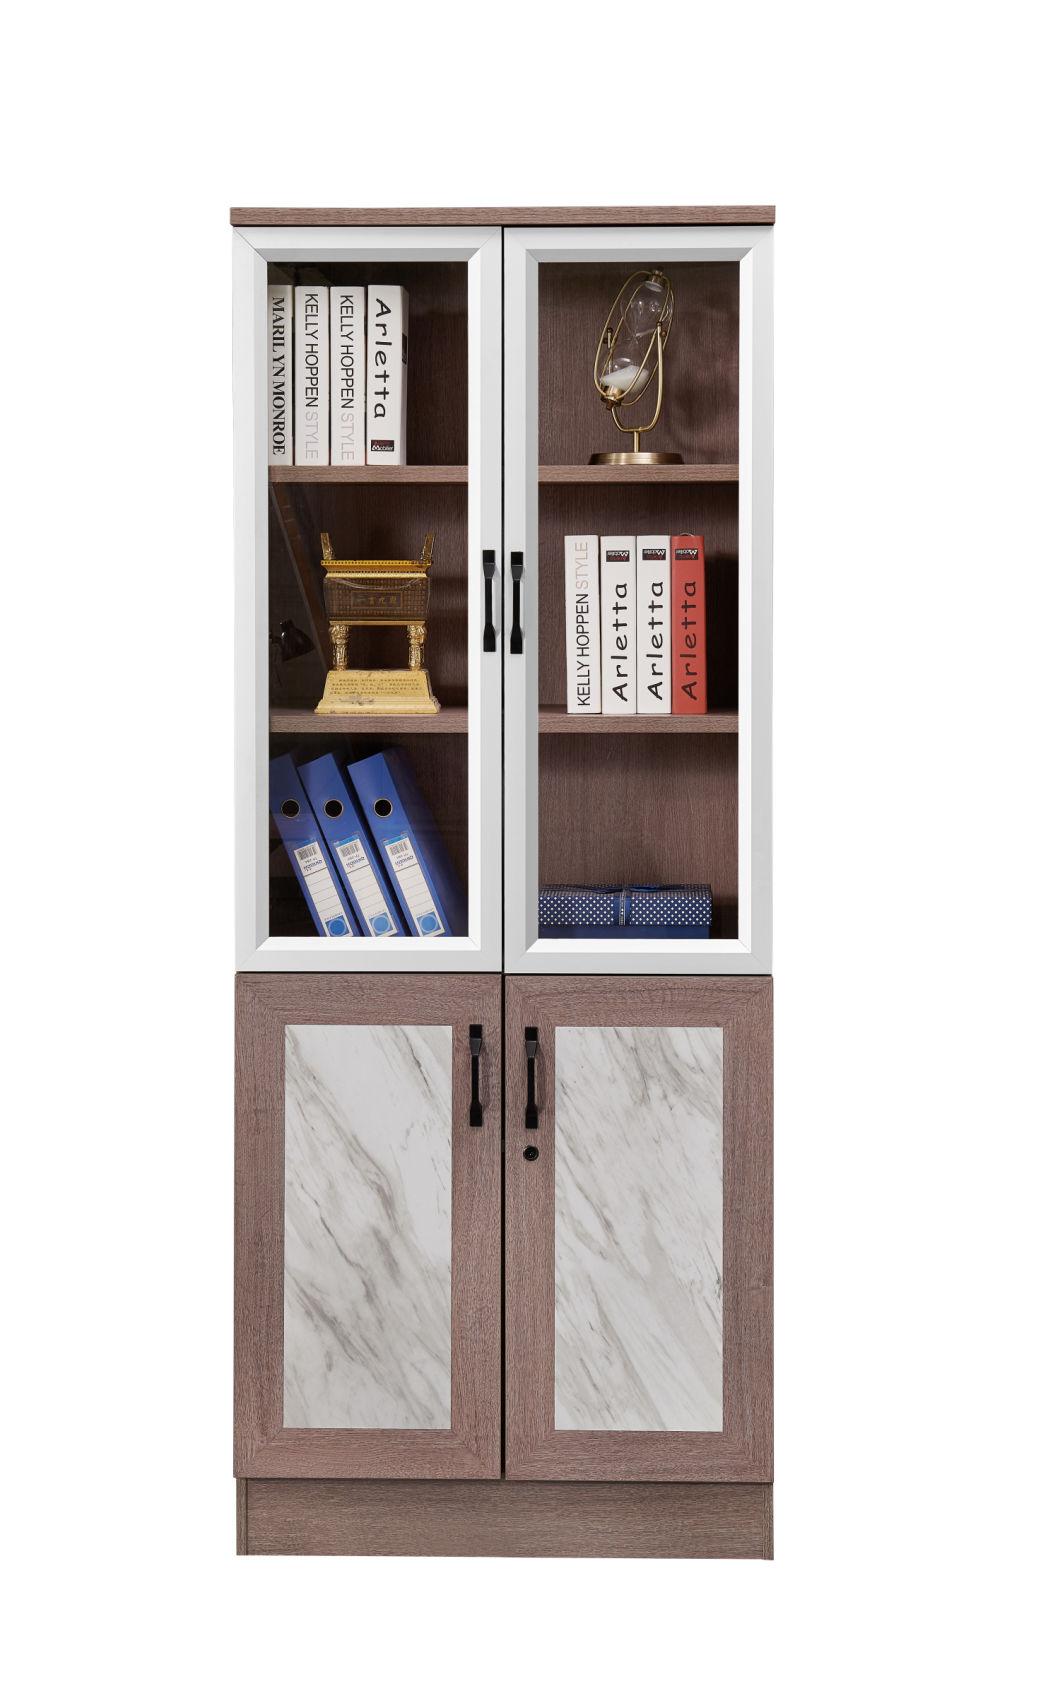 Hot Sale Modern Design MDF Wooden 2 Doors Bookshelf